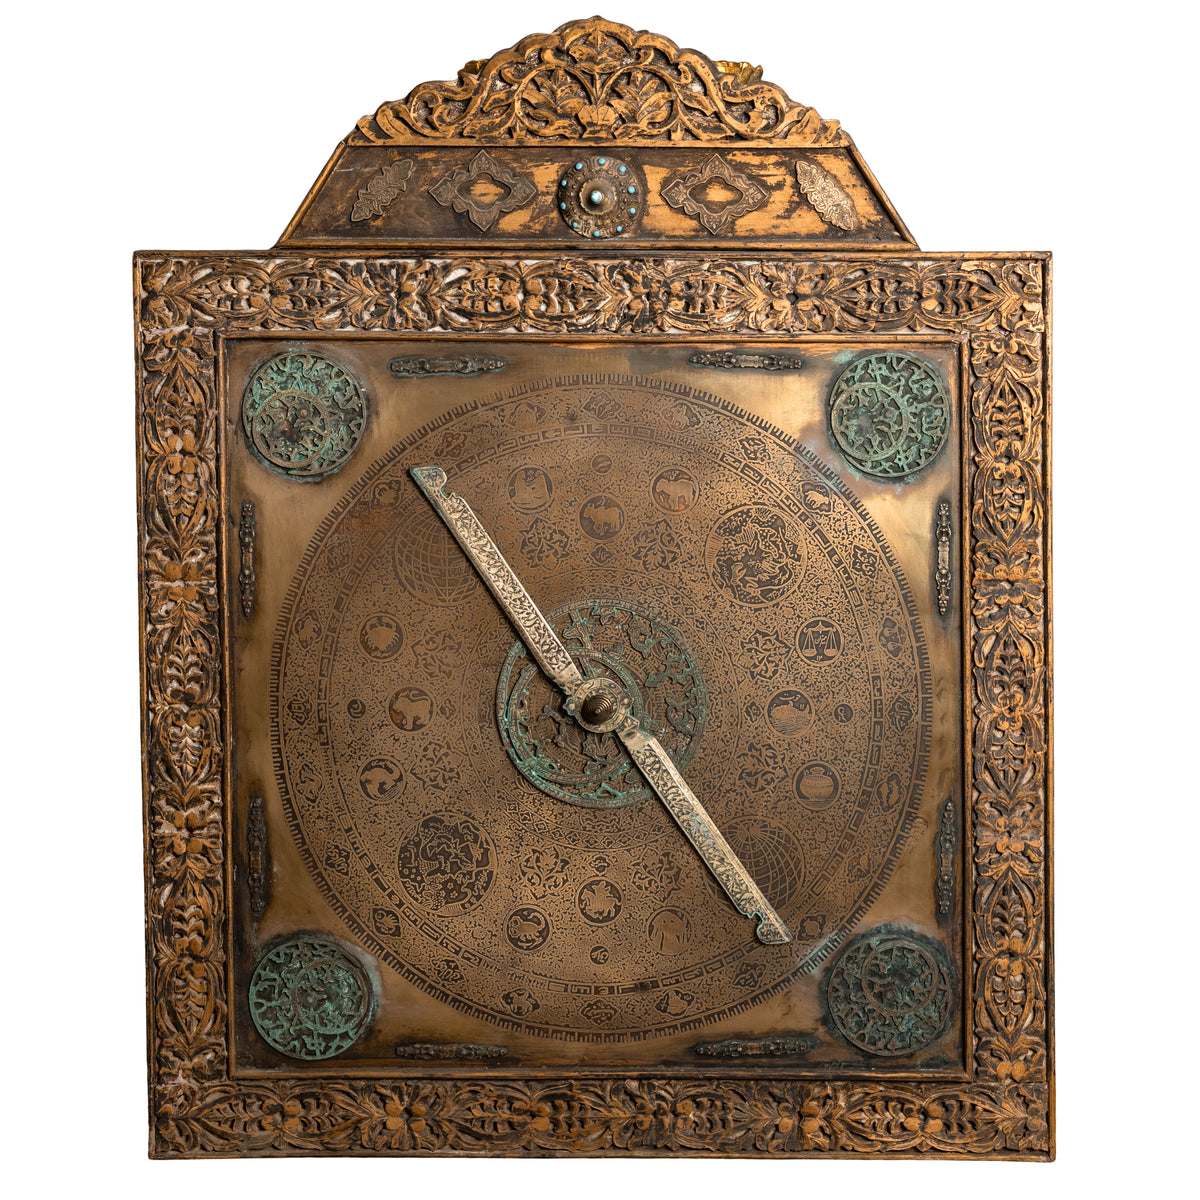 Monumental Antique Islamic Ottoman Safavid Astrological Astrolabe on Stand 1720